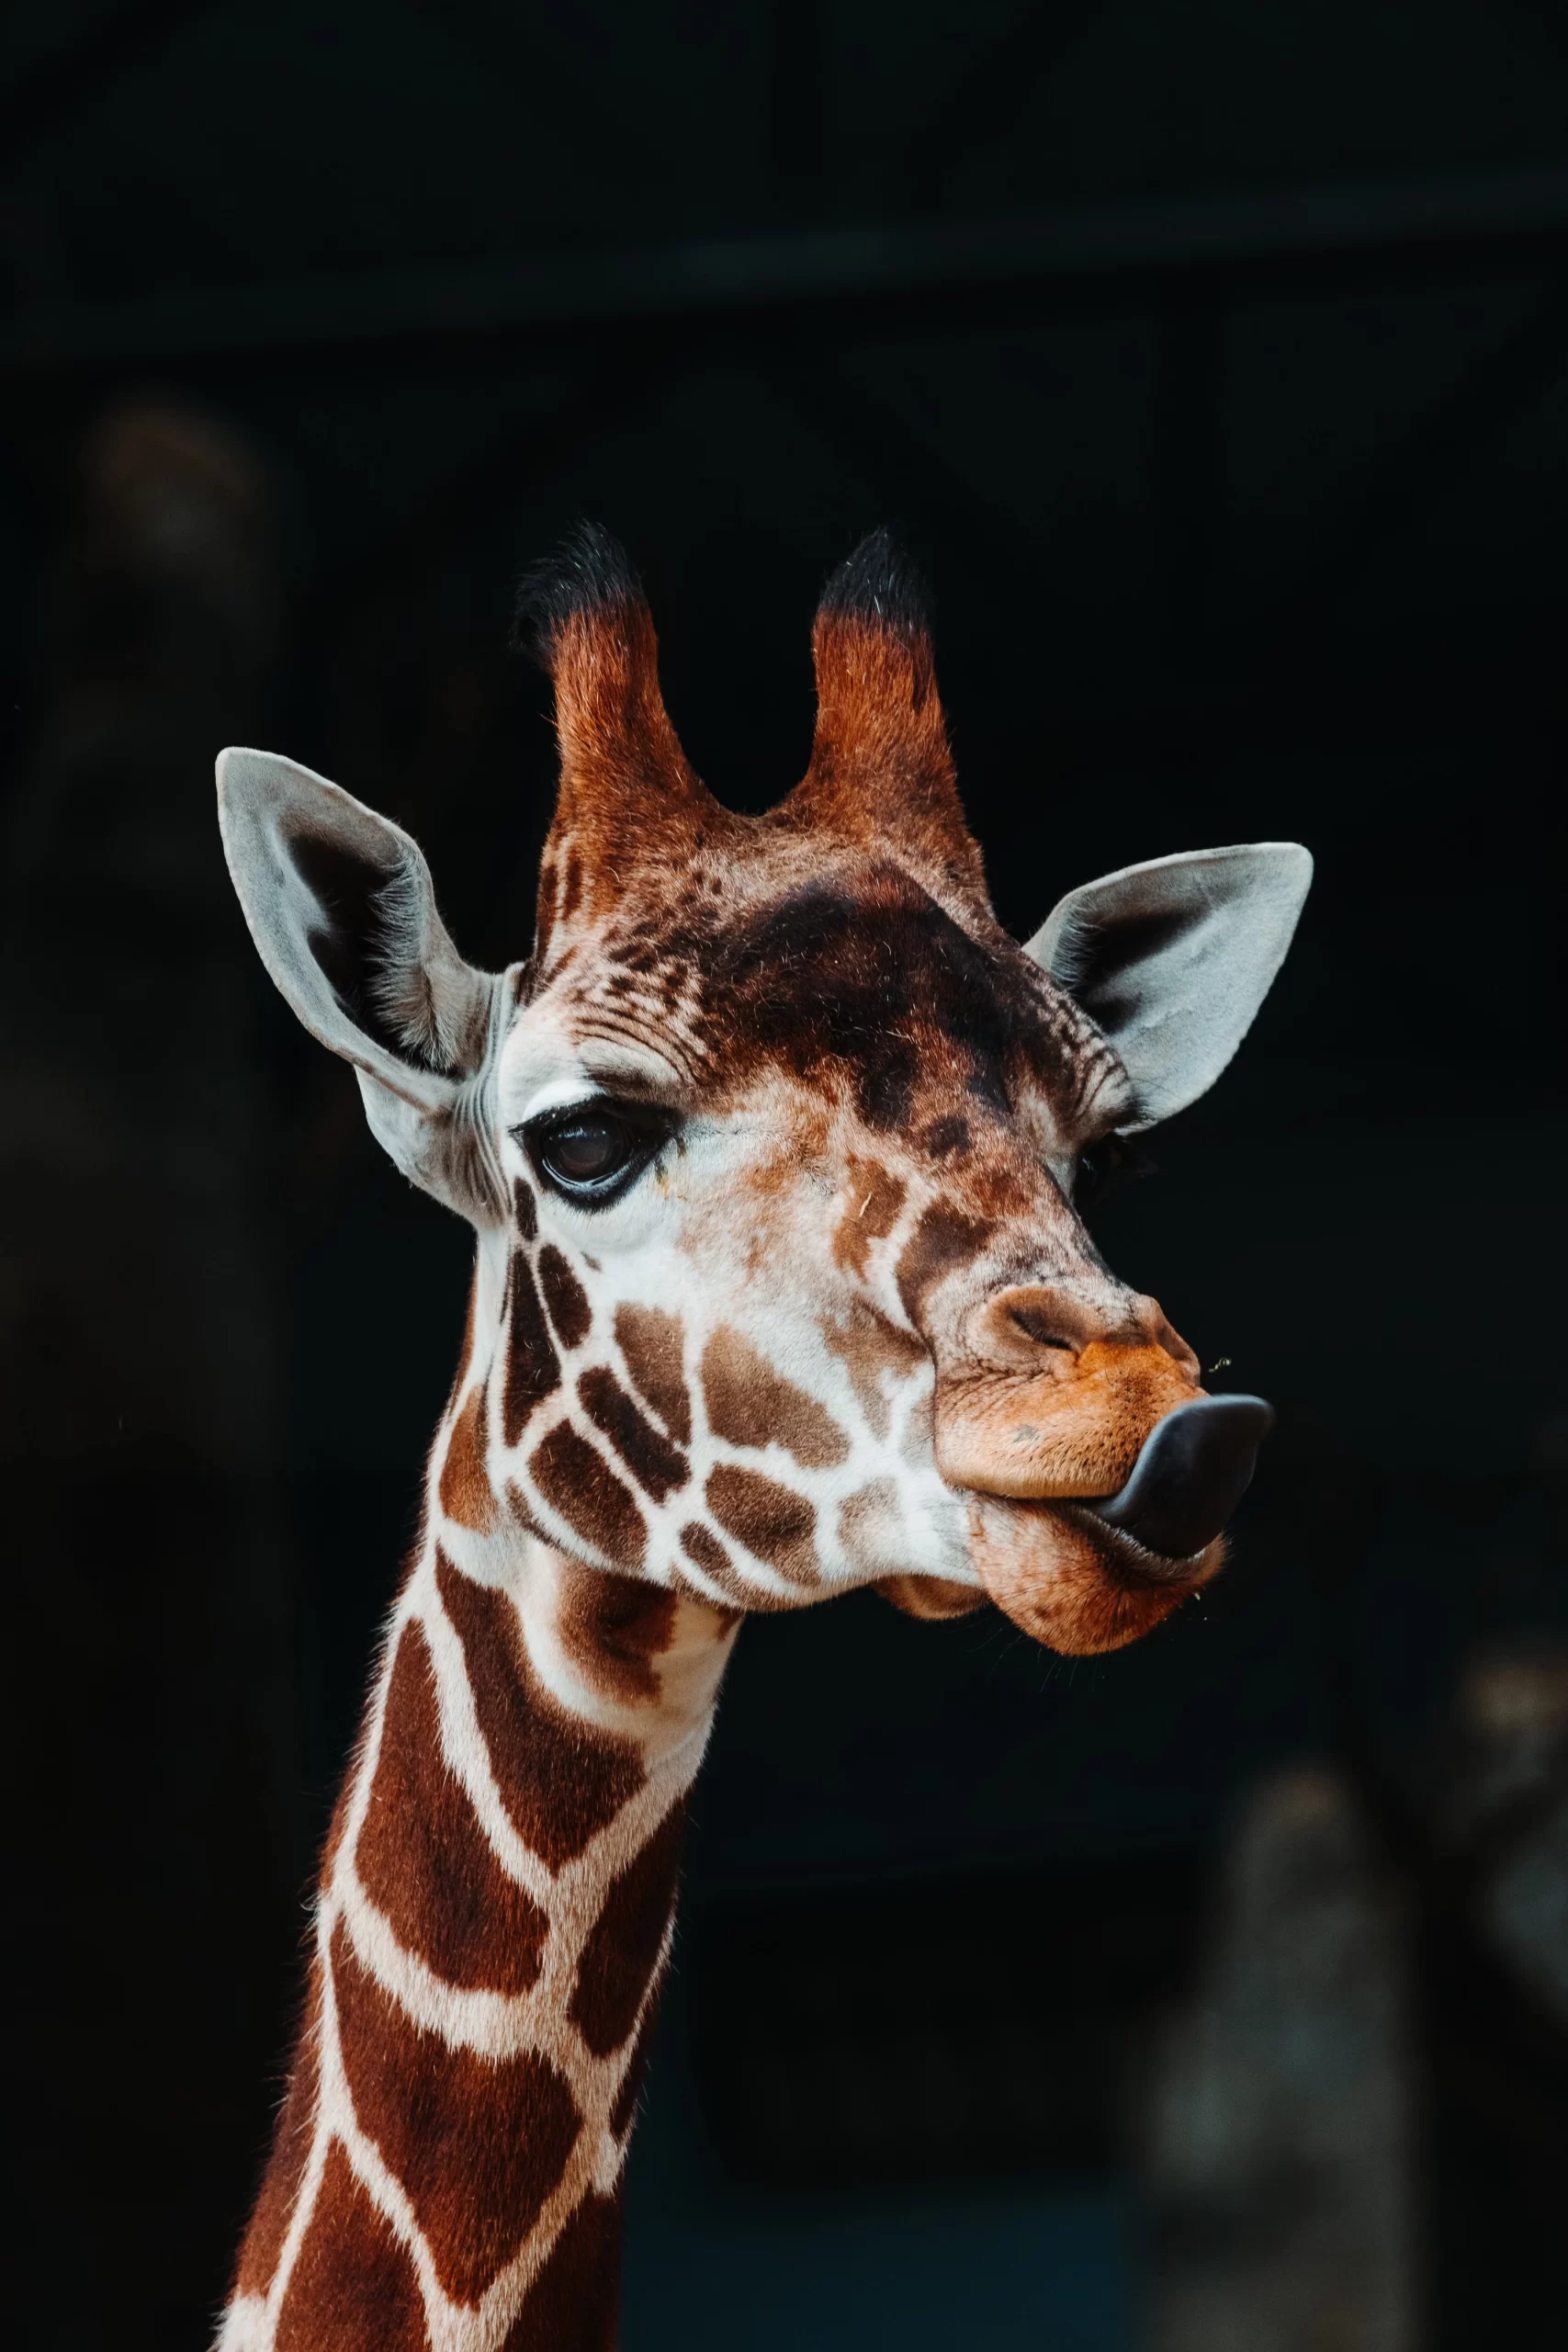 andy-holmes-Giraffe sticking out tongue at camera-unsplash